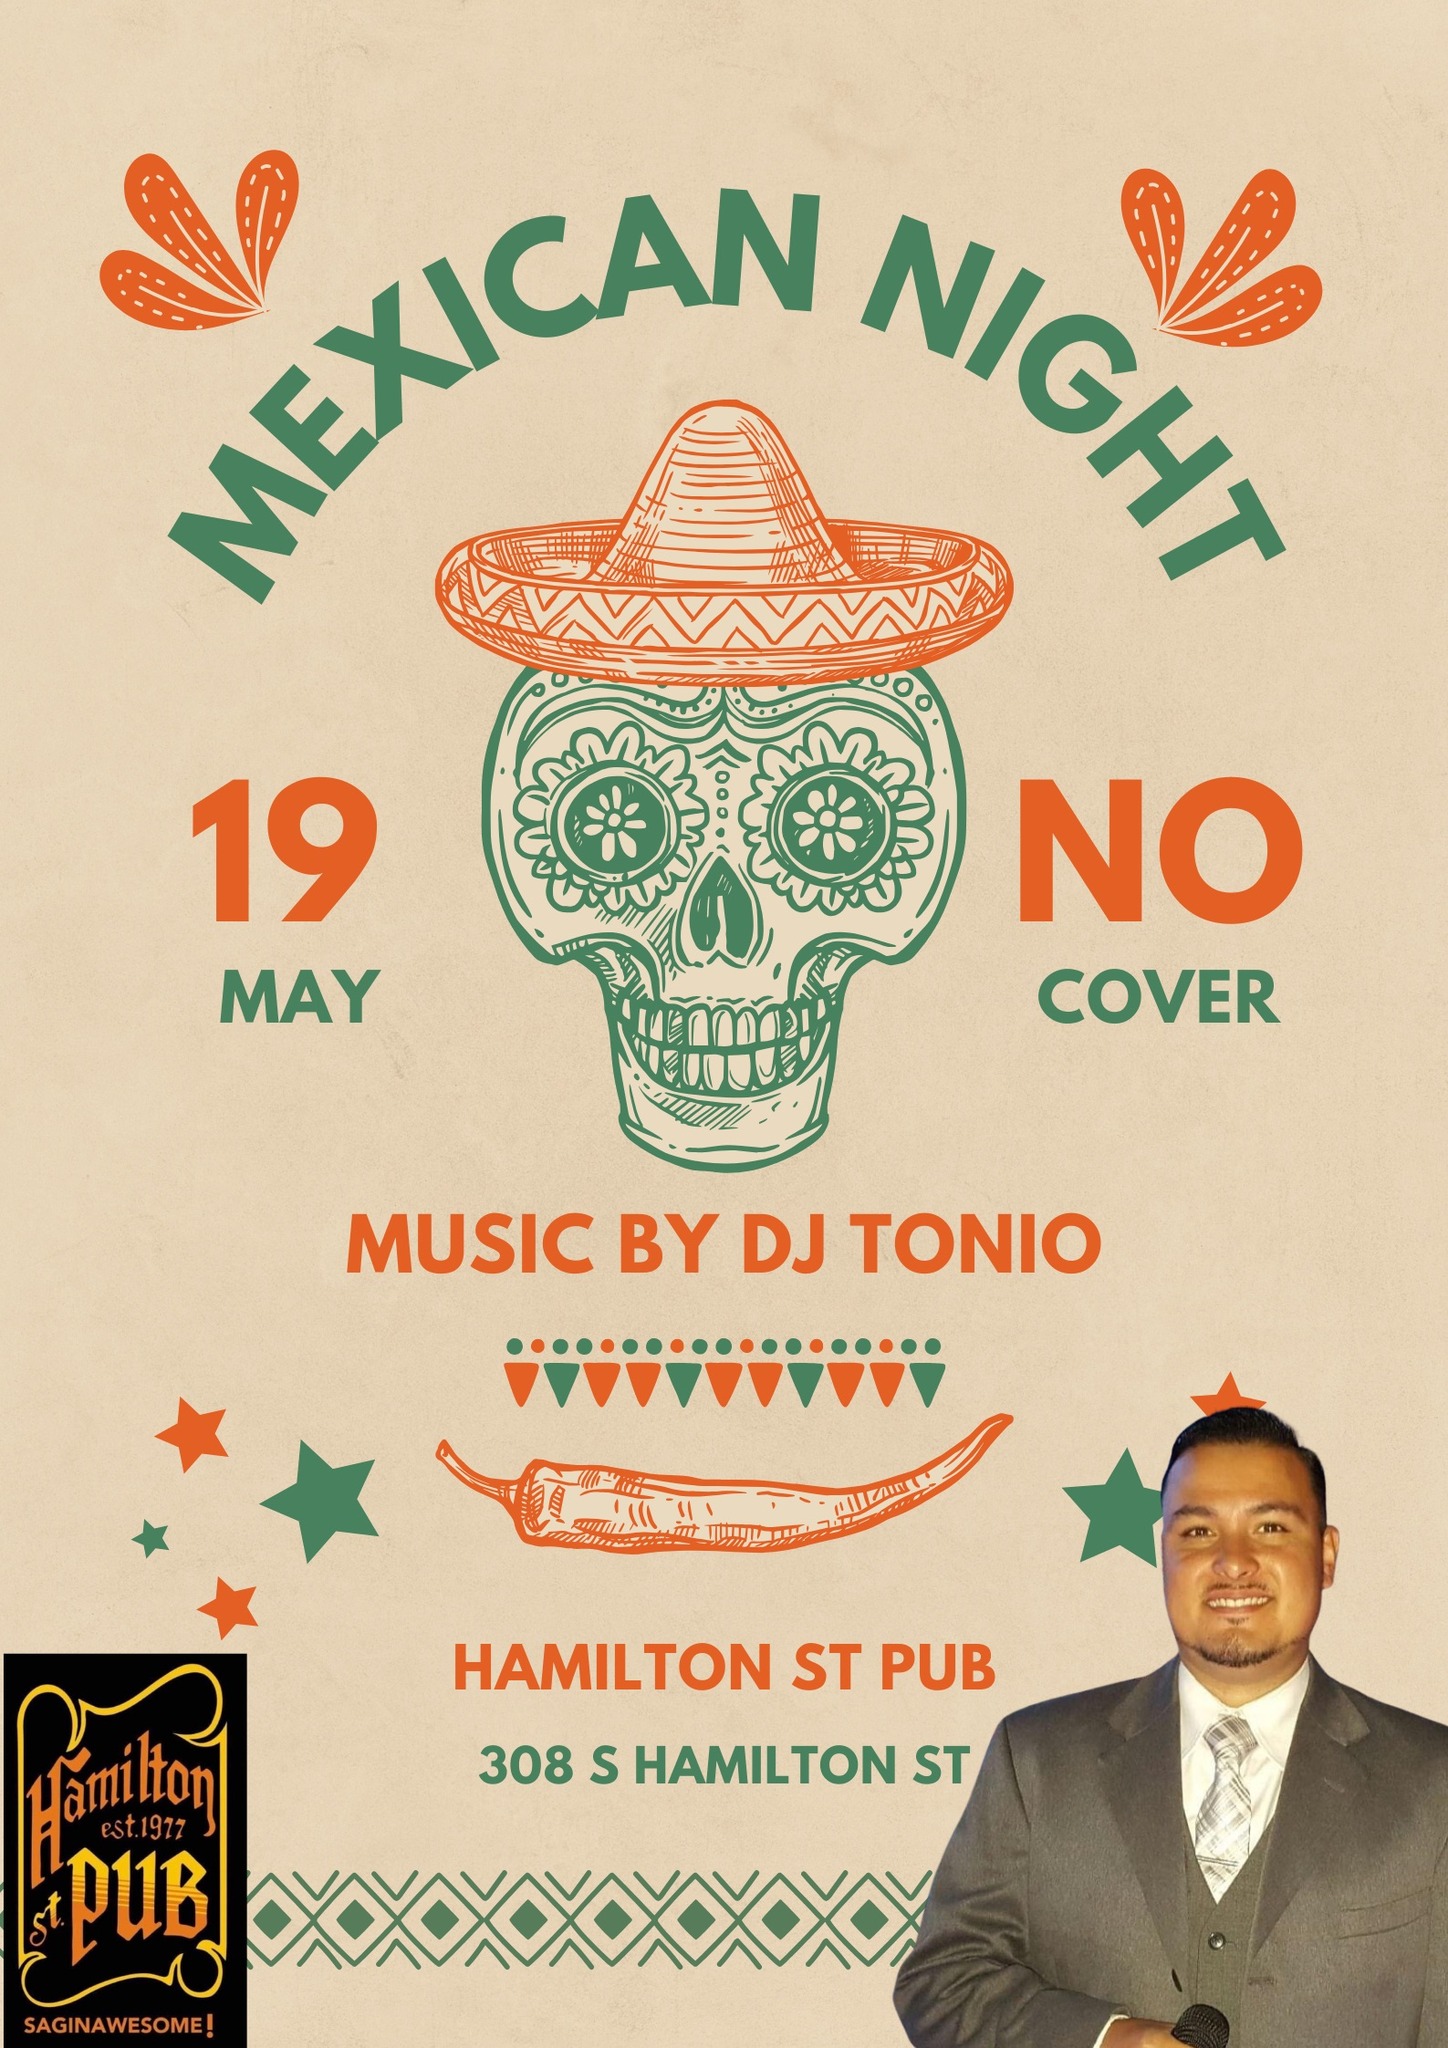 Mexican night! Dj Tonio